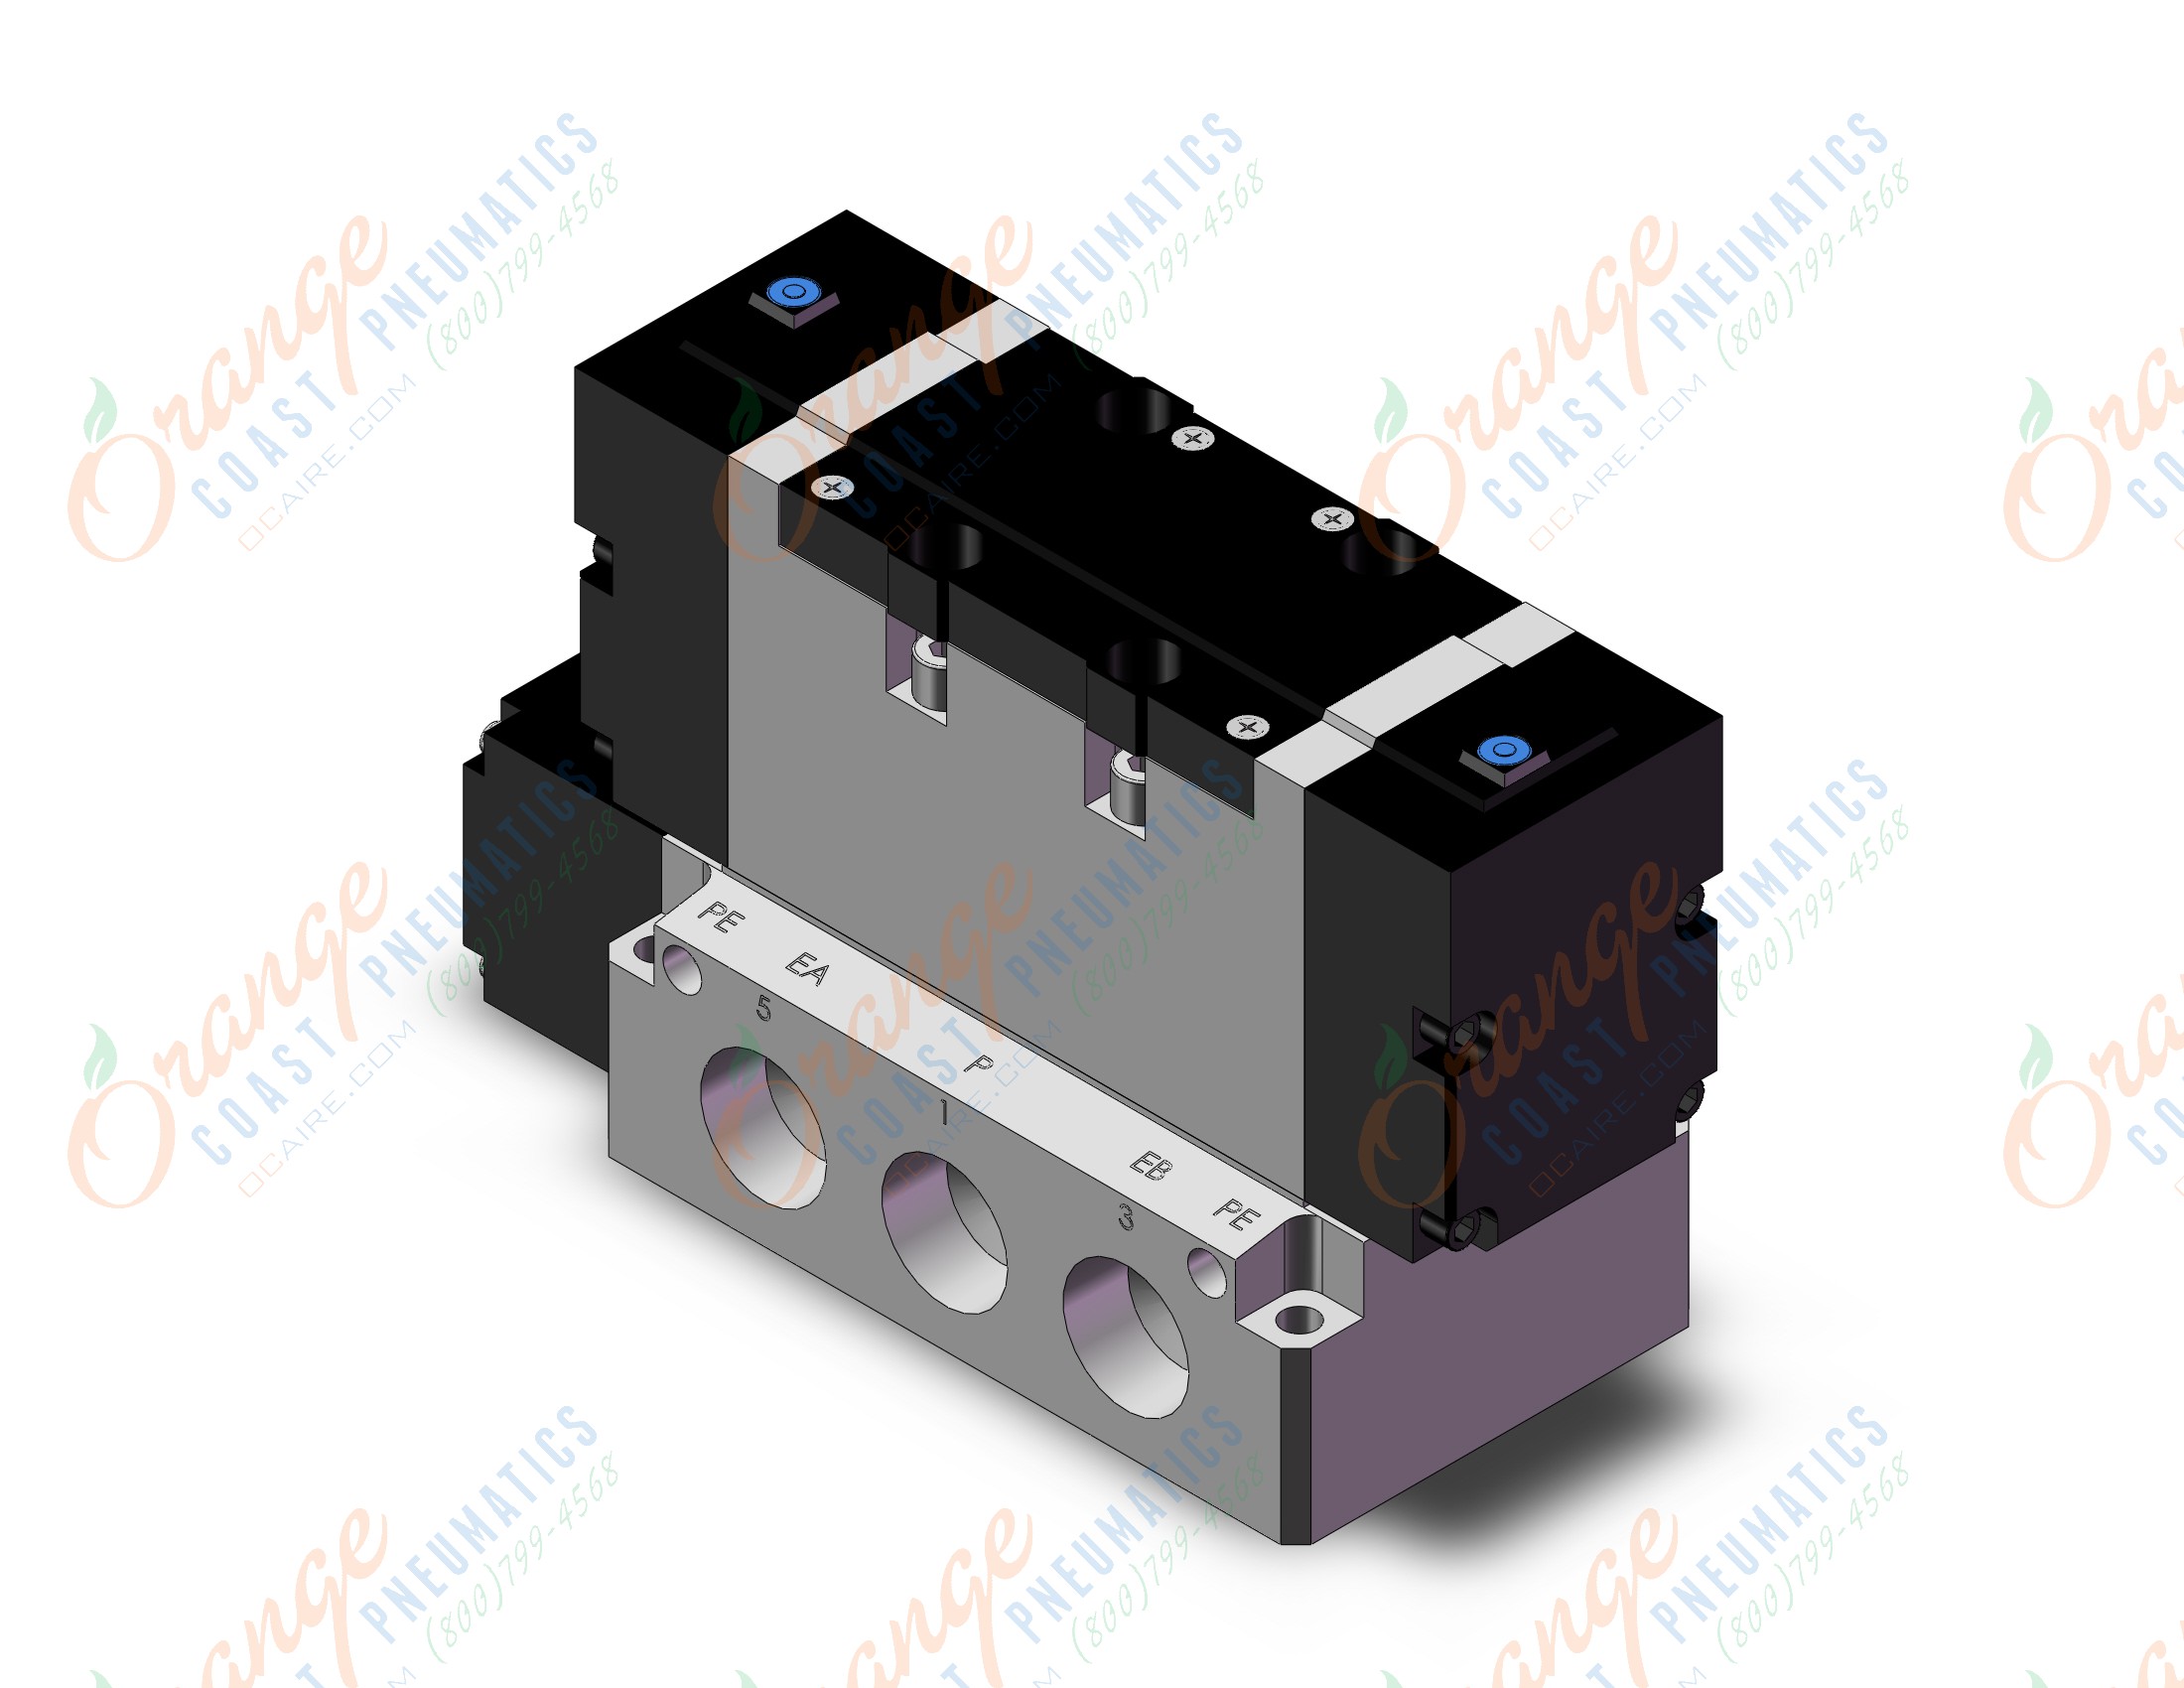 SMC VFR6100-3FZ-10T valve sgl plug-in base mt, VFS6000 SOL VALVE 4/5 PORT